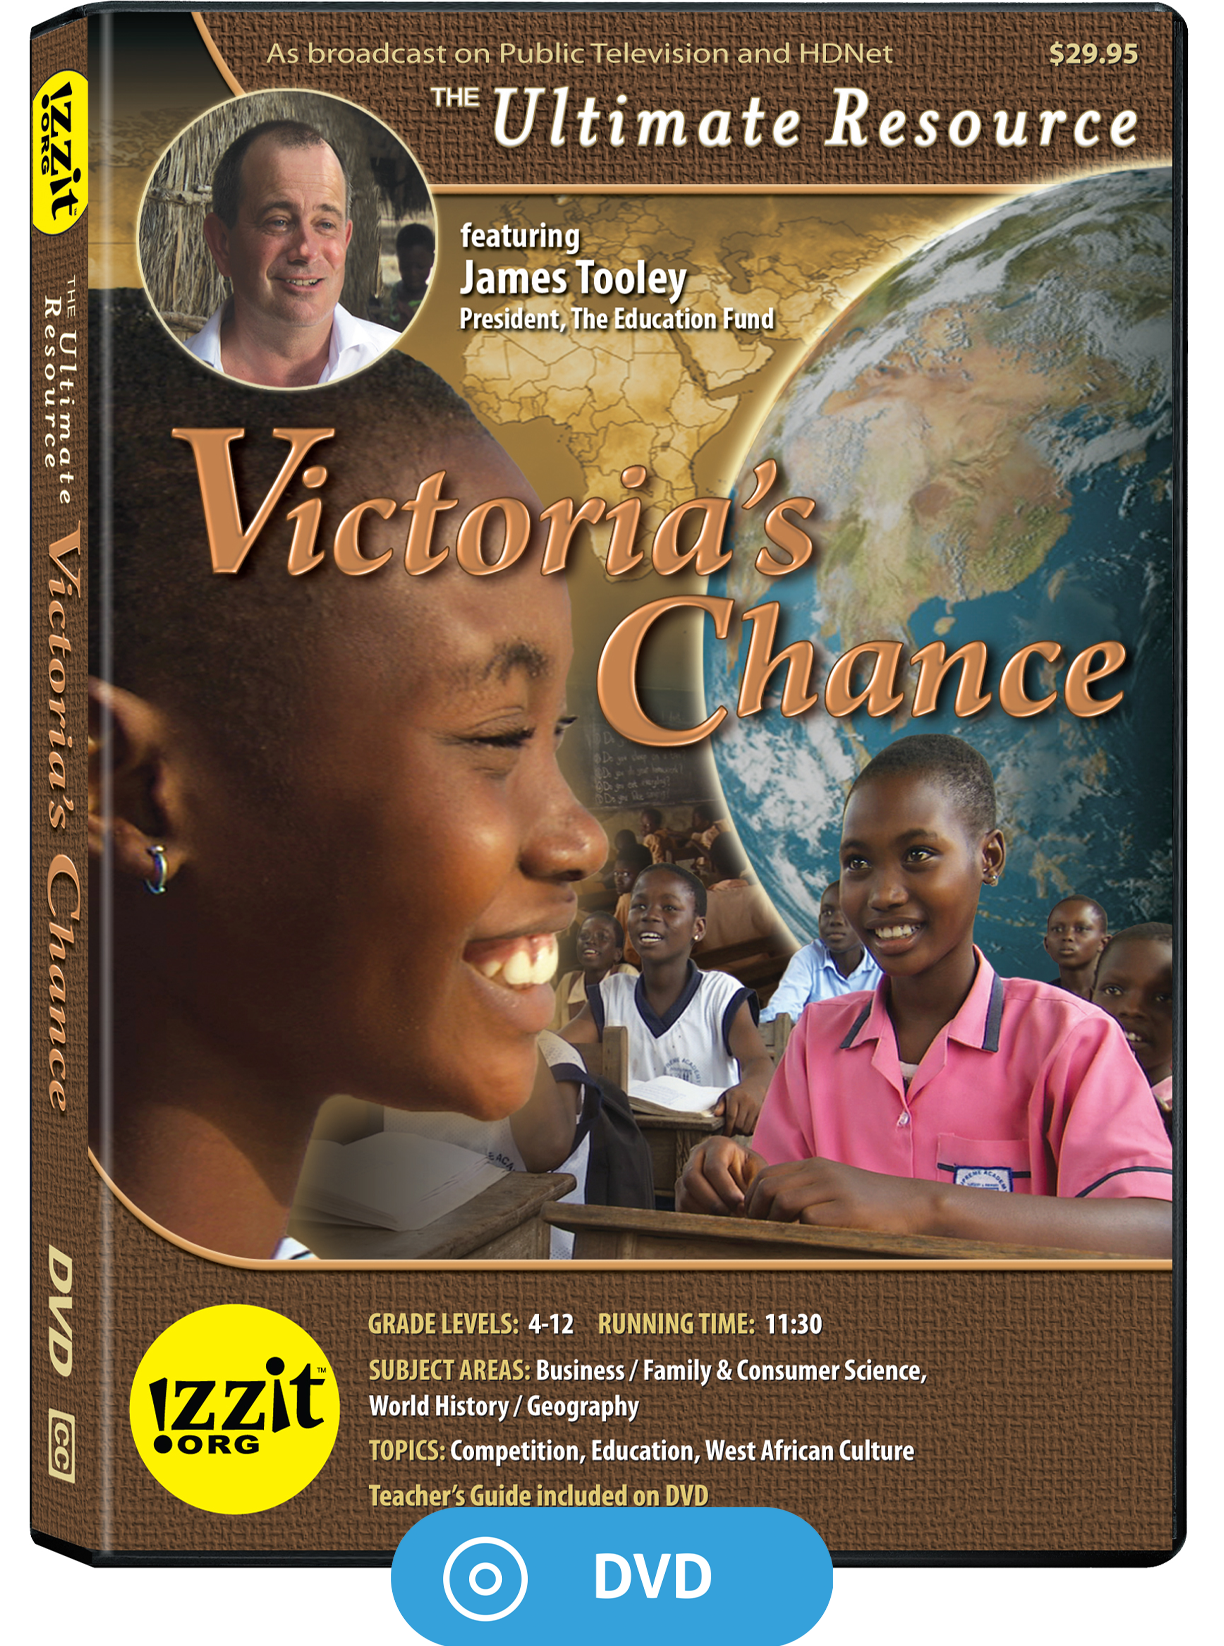 Victoria's Chance DVD